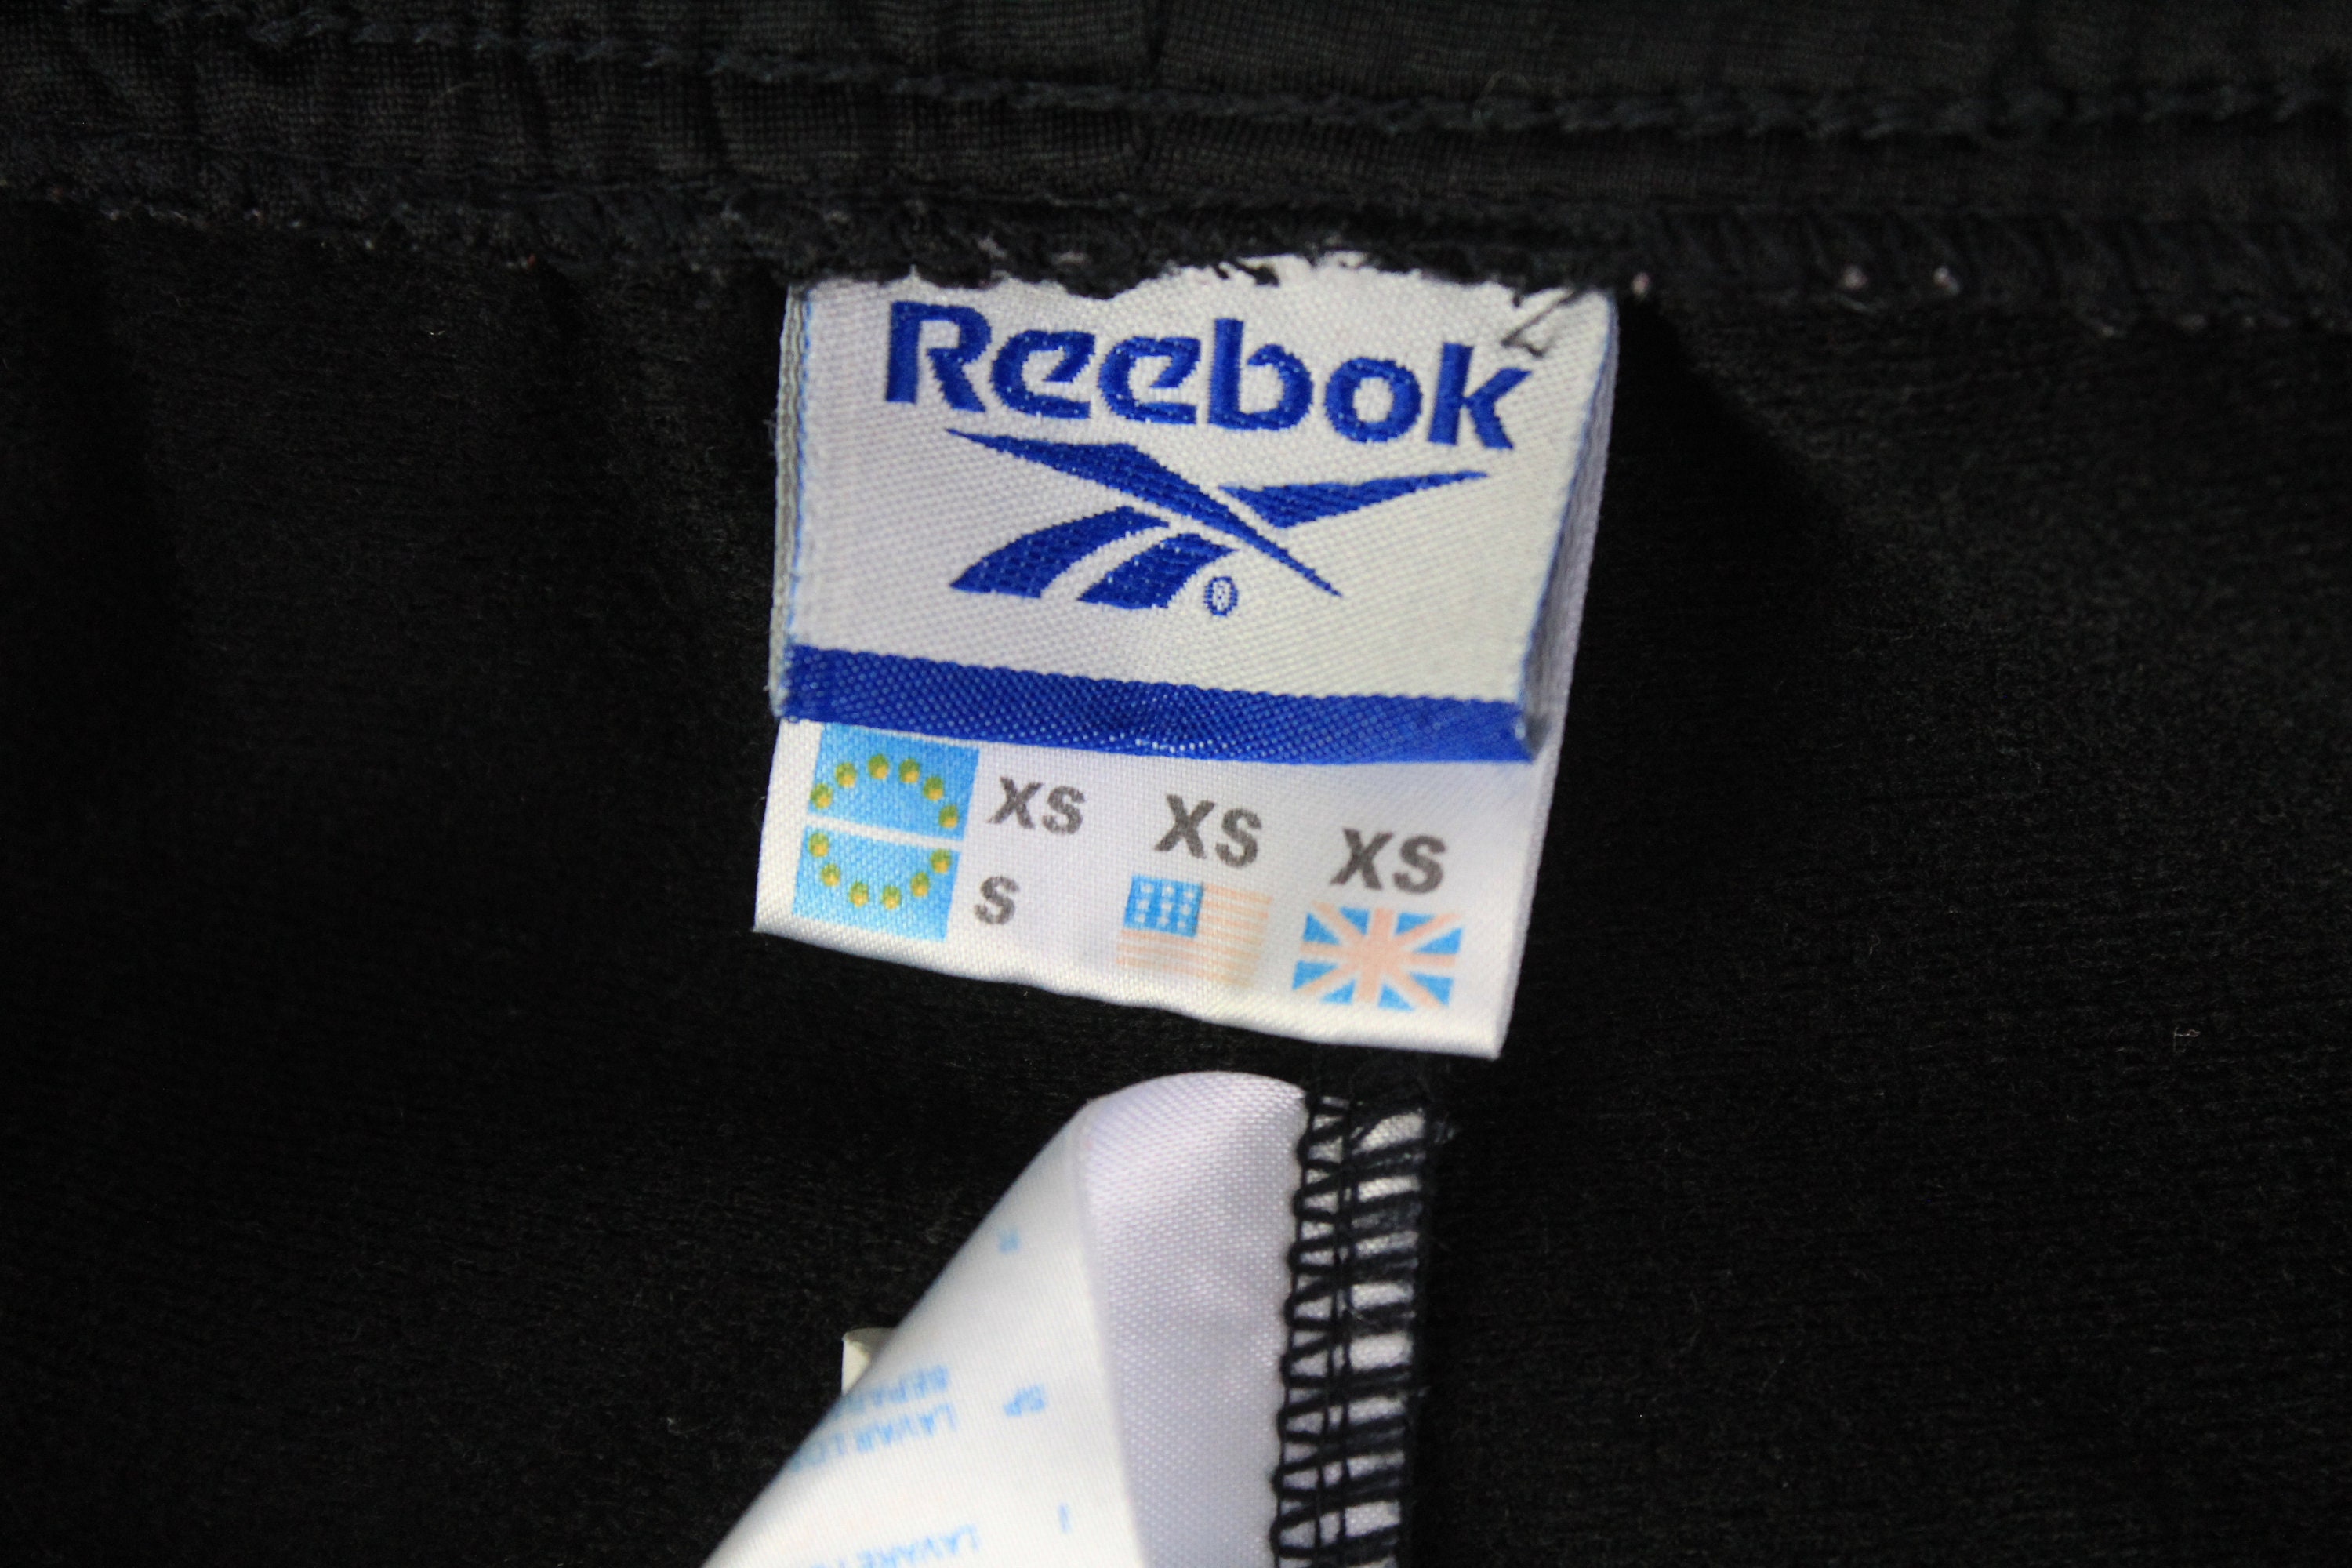 REEBOK S Oversize Retro Sport Clothing - Etsy